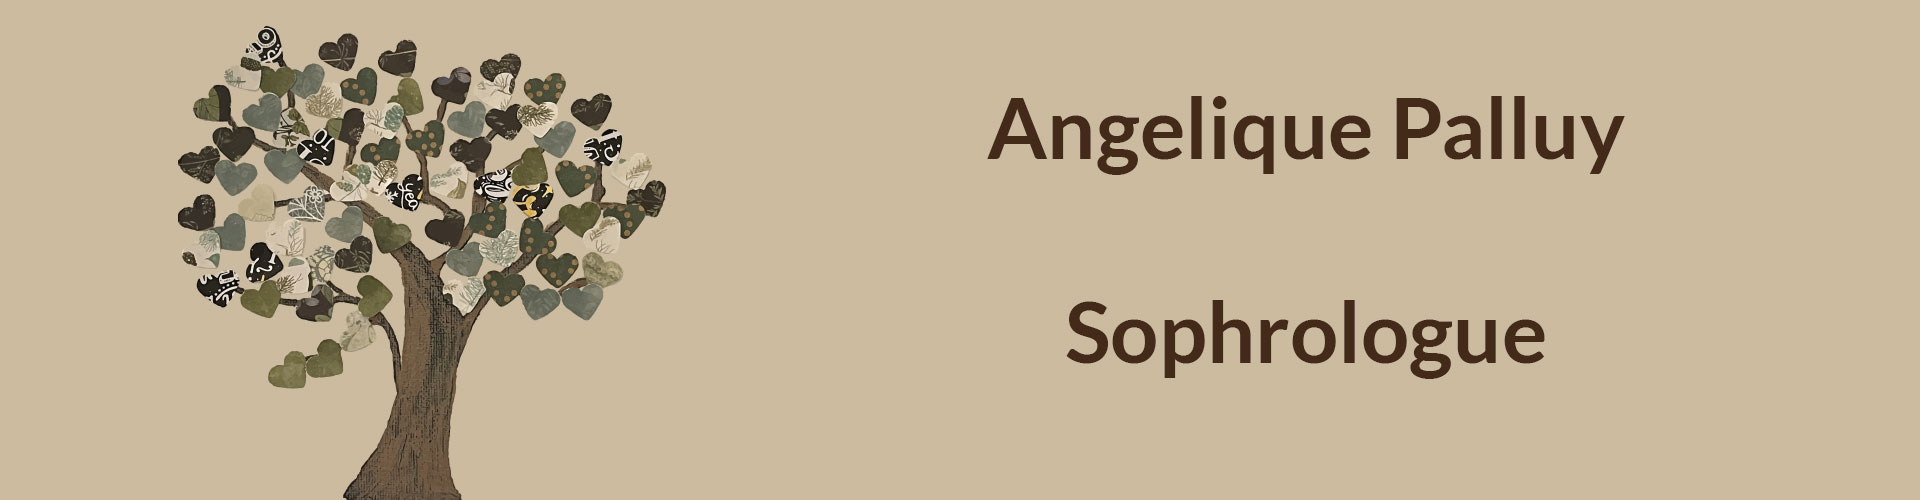 angelique palluy sophrologue